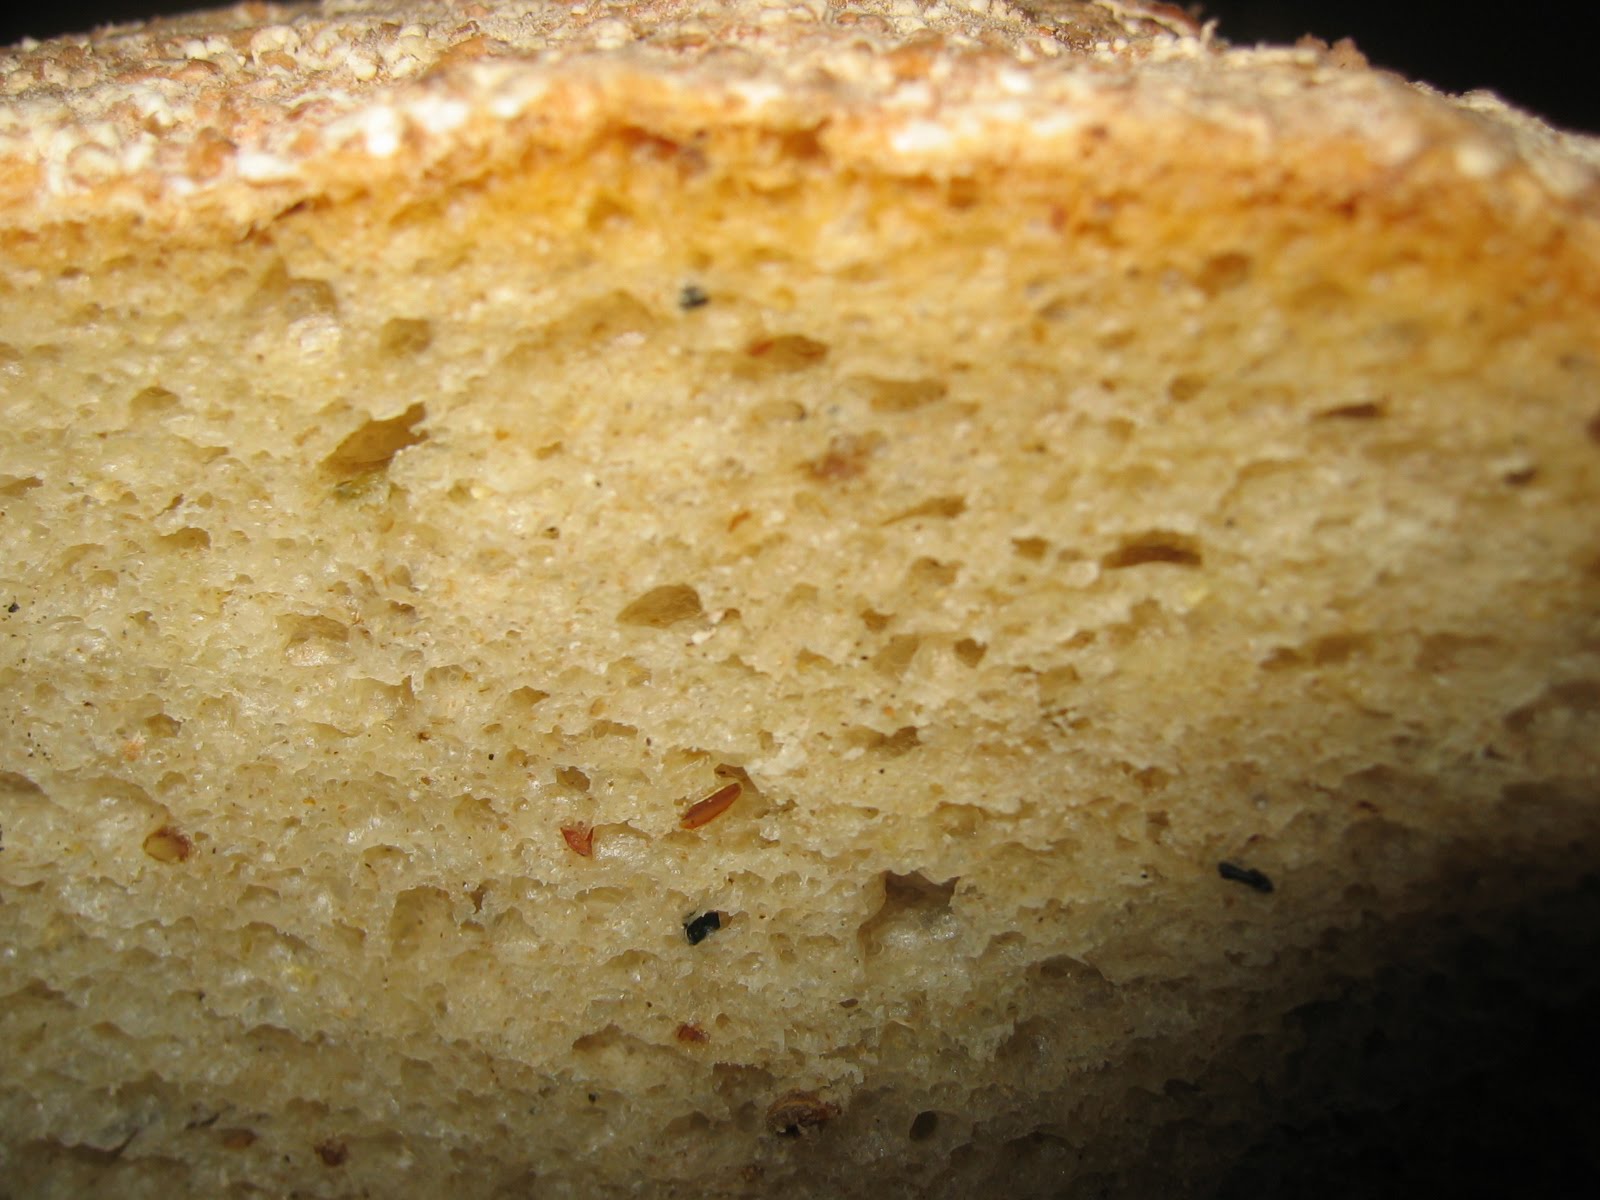 Тесто на кефире в хлебопечке